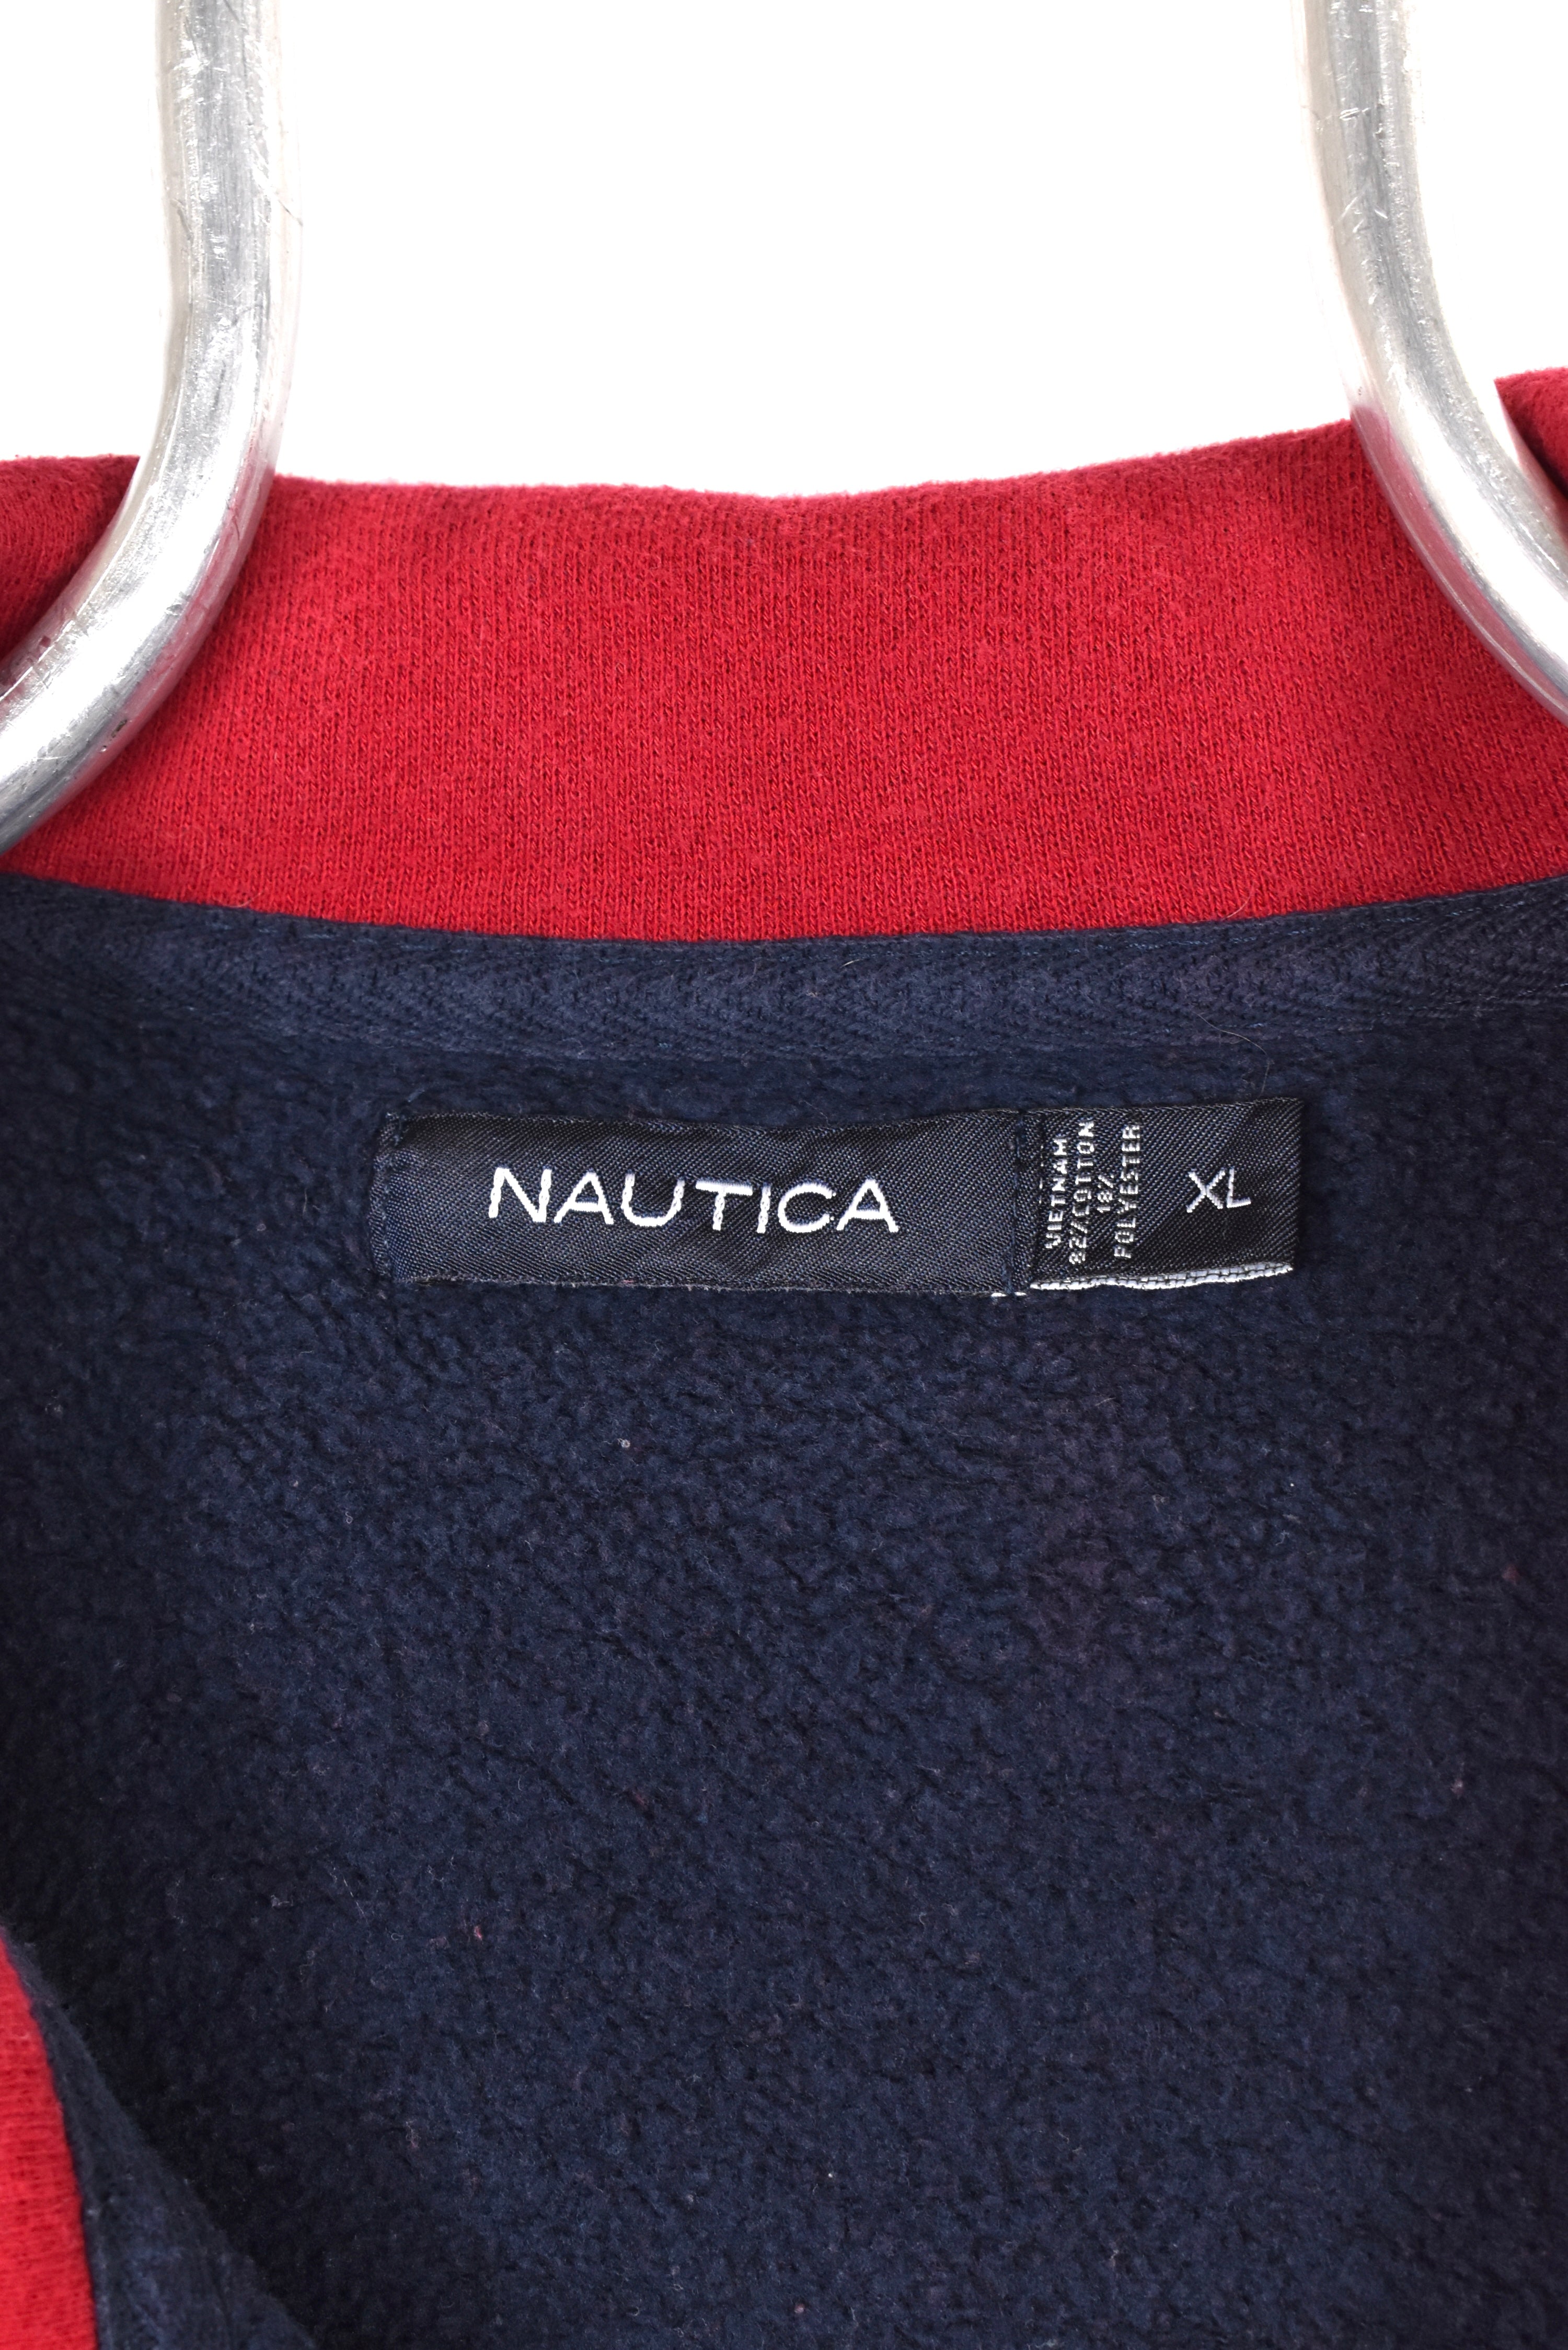 Vintage Nautica sweatshirt, embroidered 1/4 zip jumper - AU XL NAUTICA